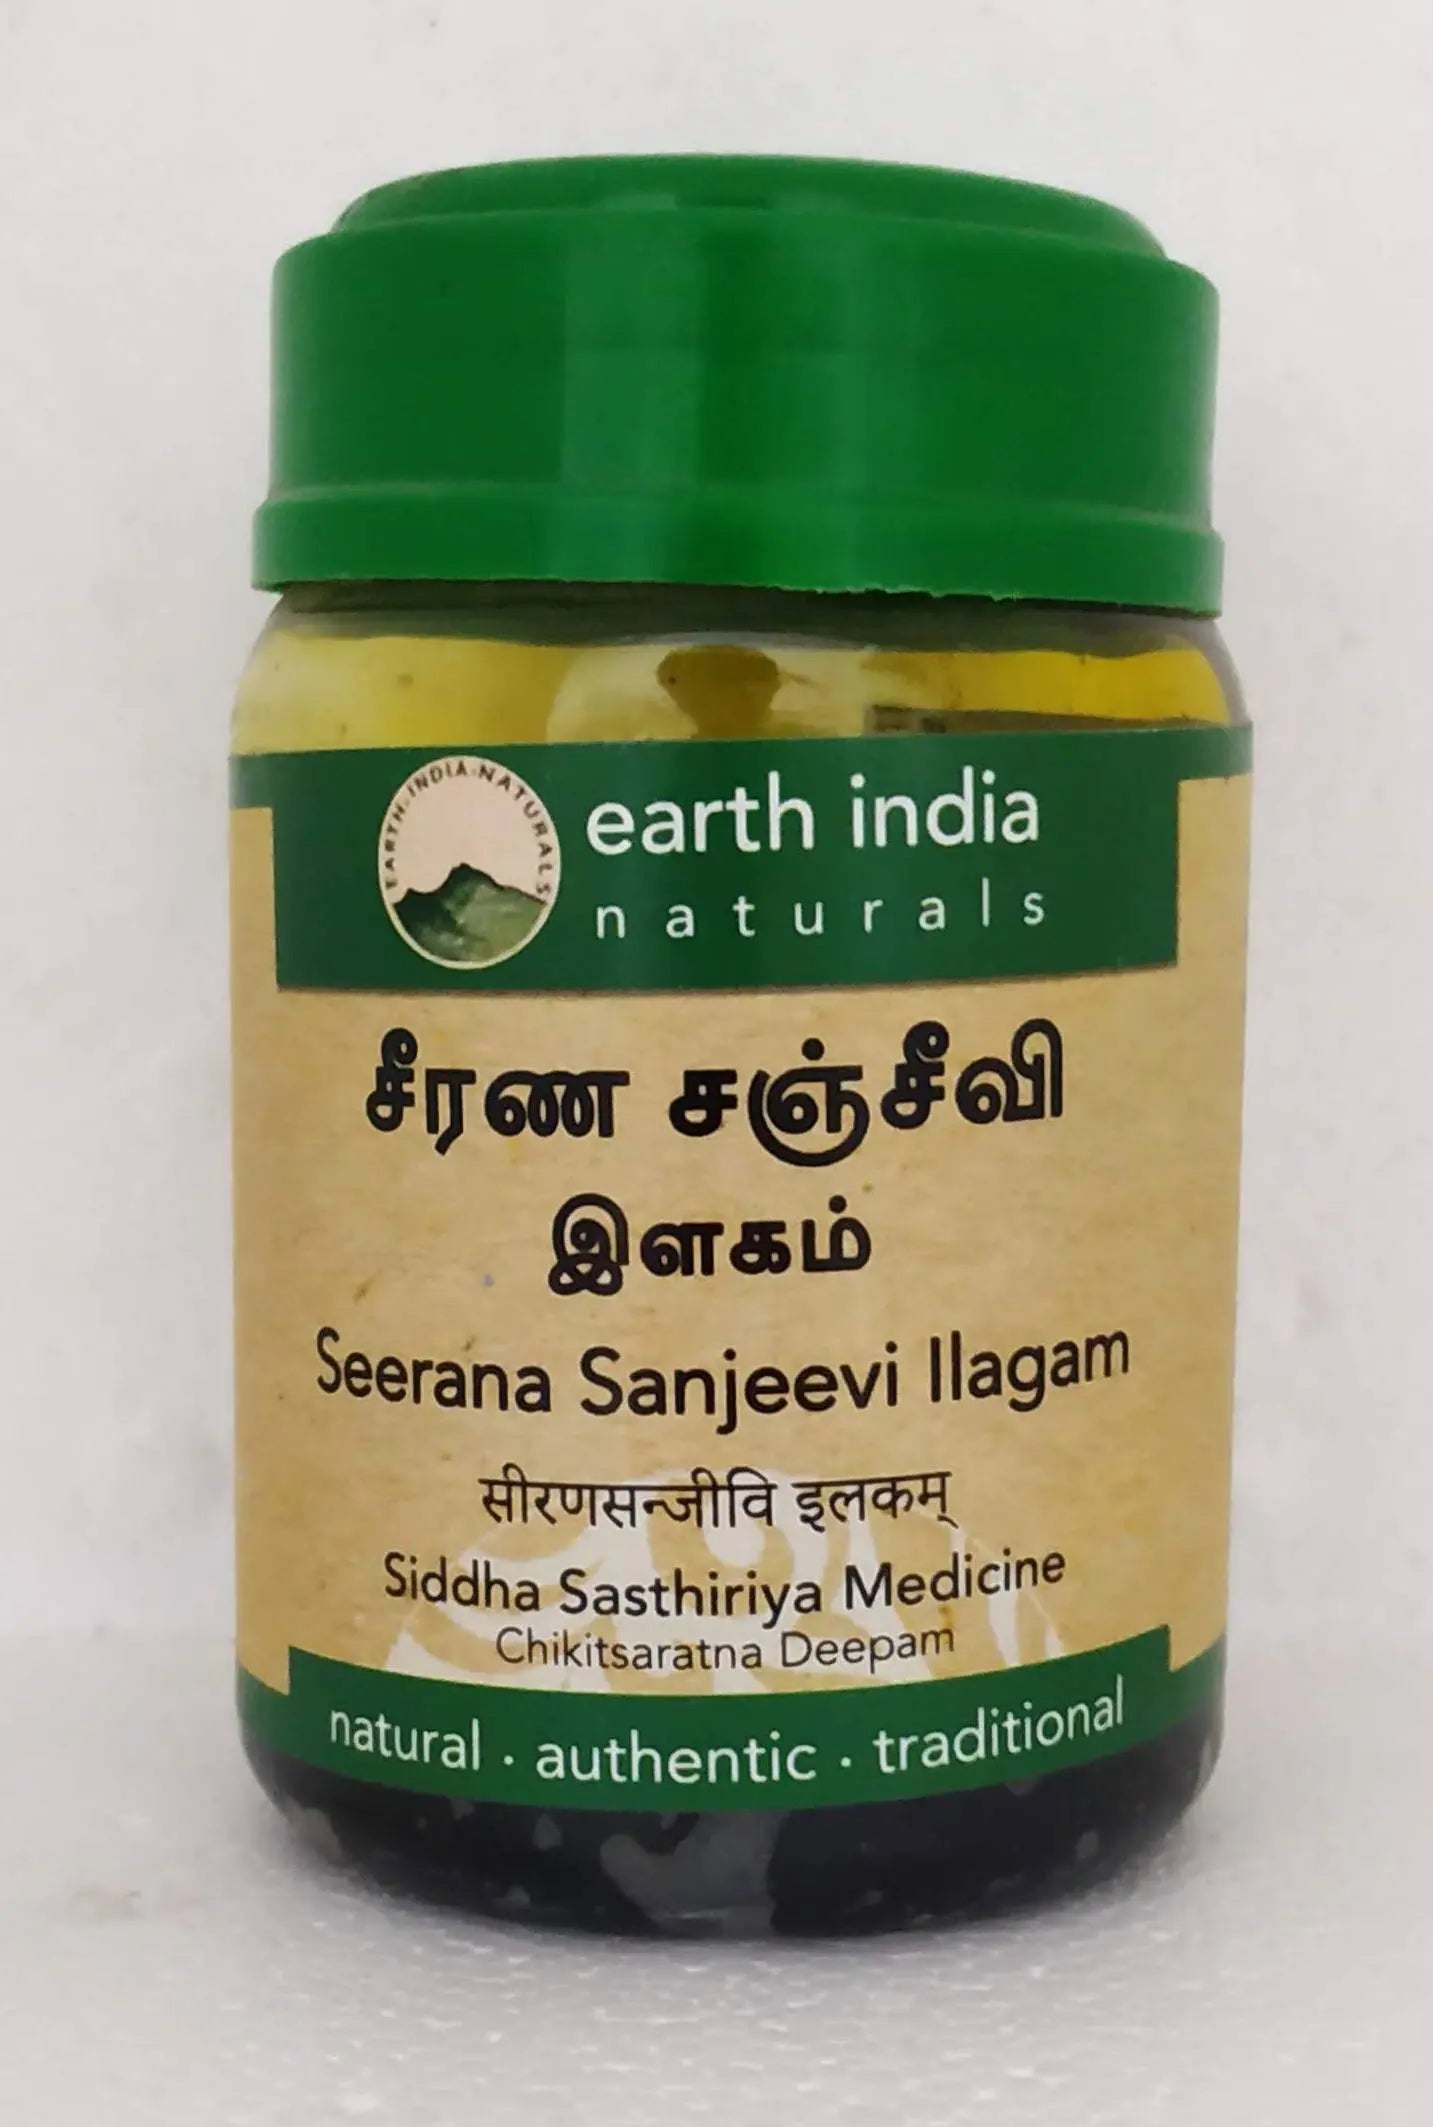 Seerana Sanjeevi Ilagam 200gm Earth India